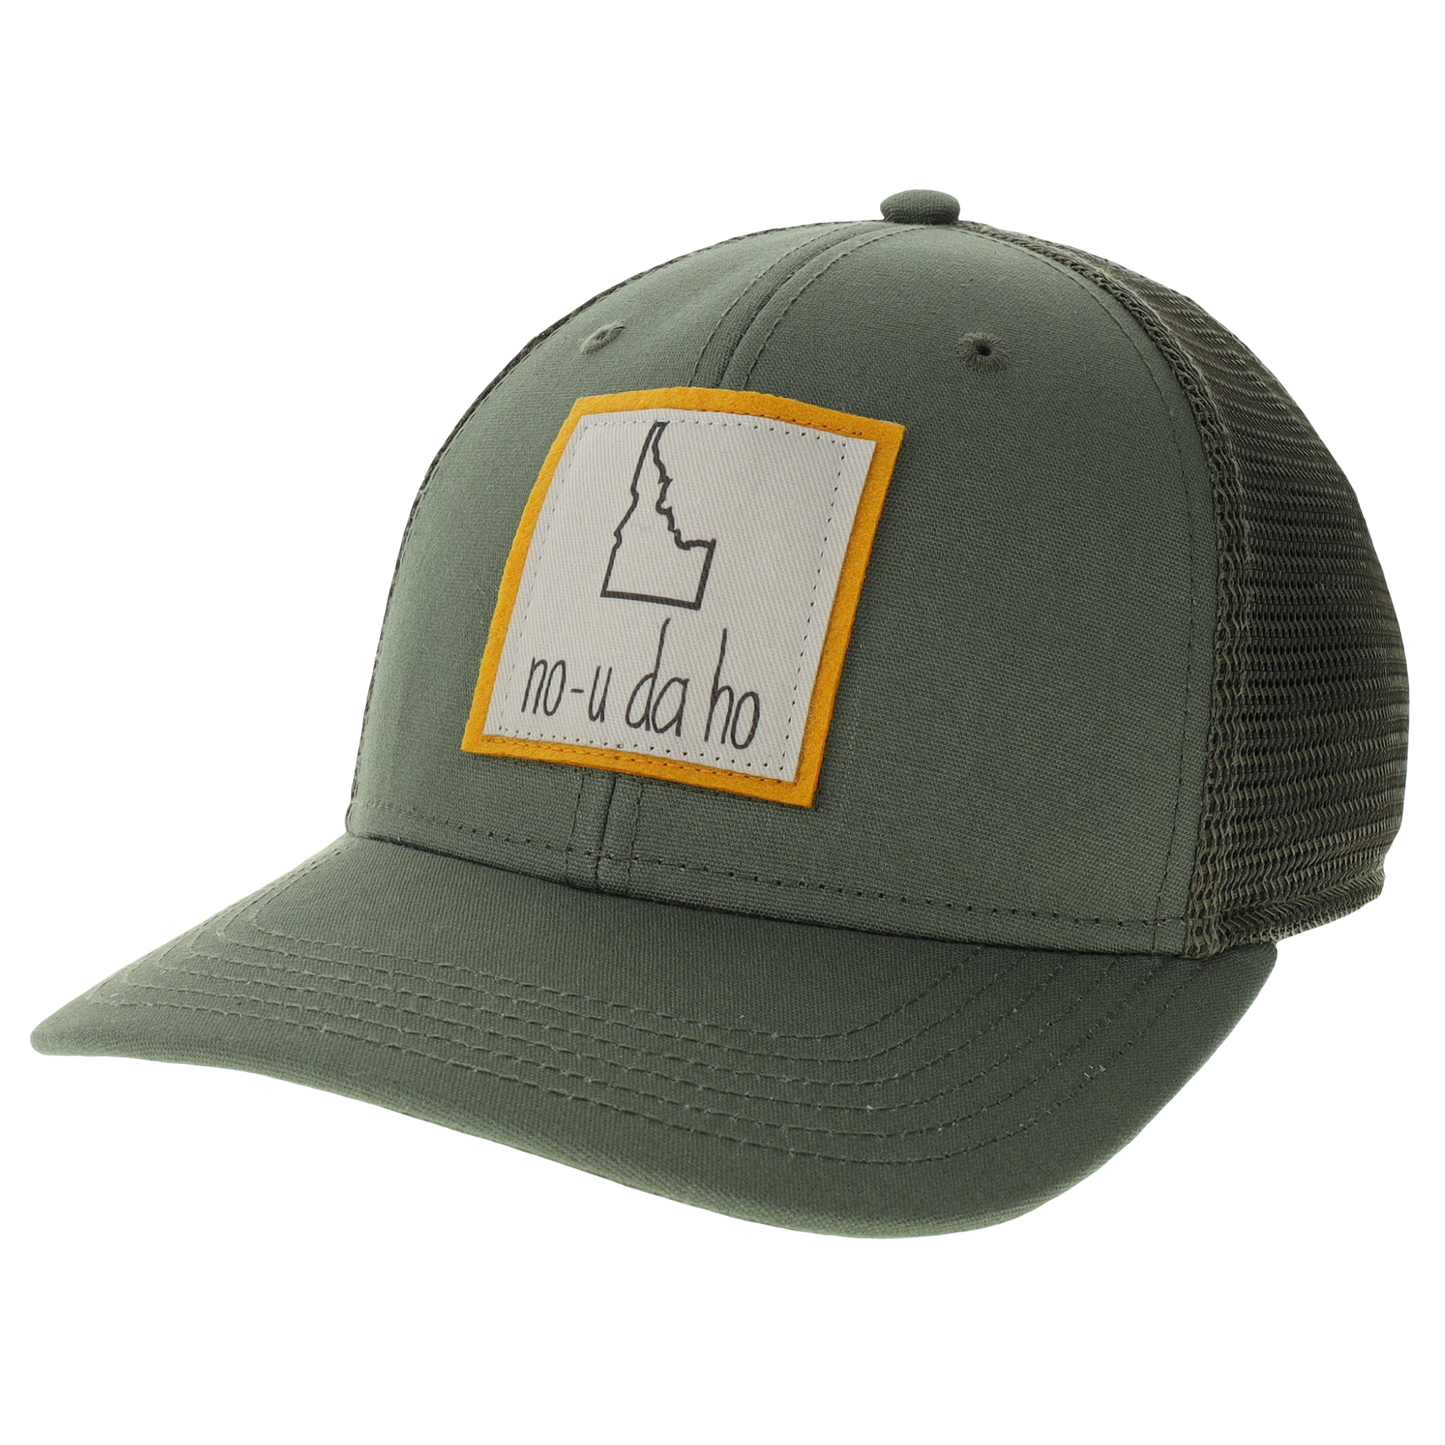 Idaho Mid-Pro Trucker Hat in Olive/Olive "no-u-da-ho"